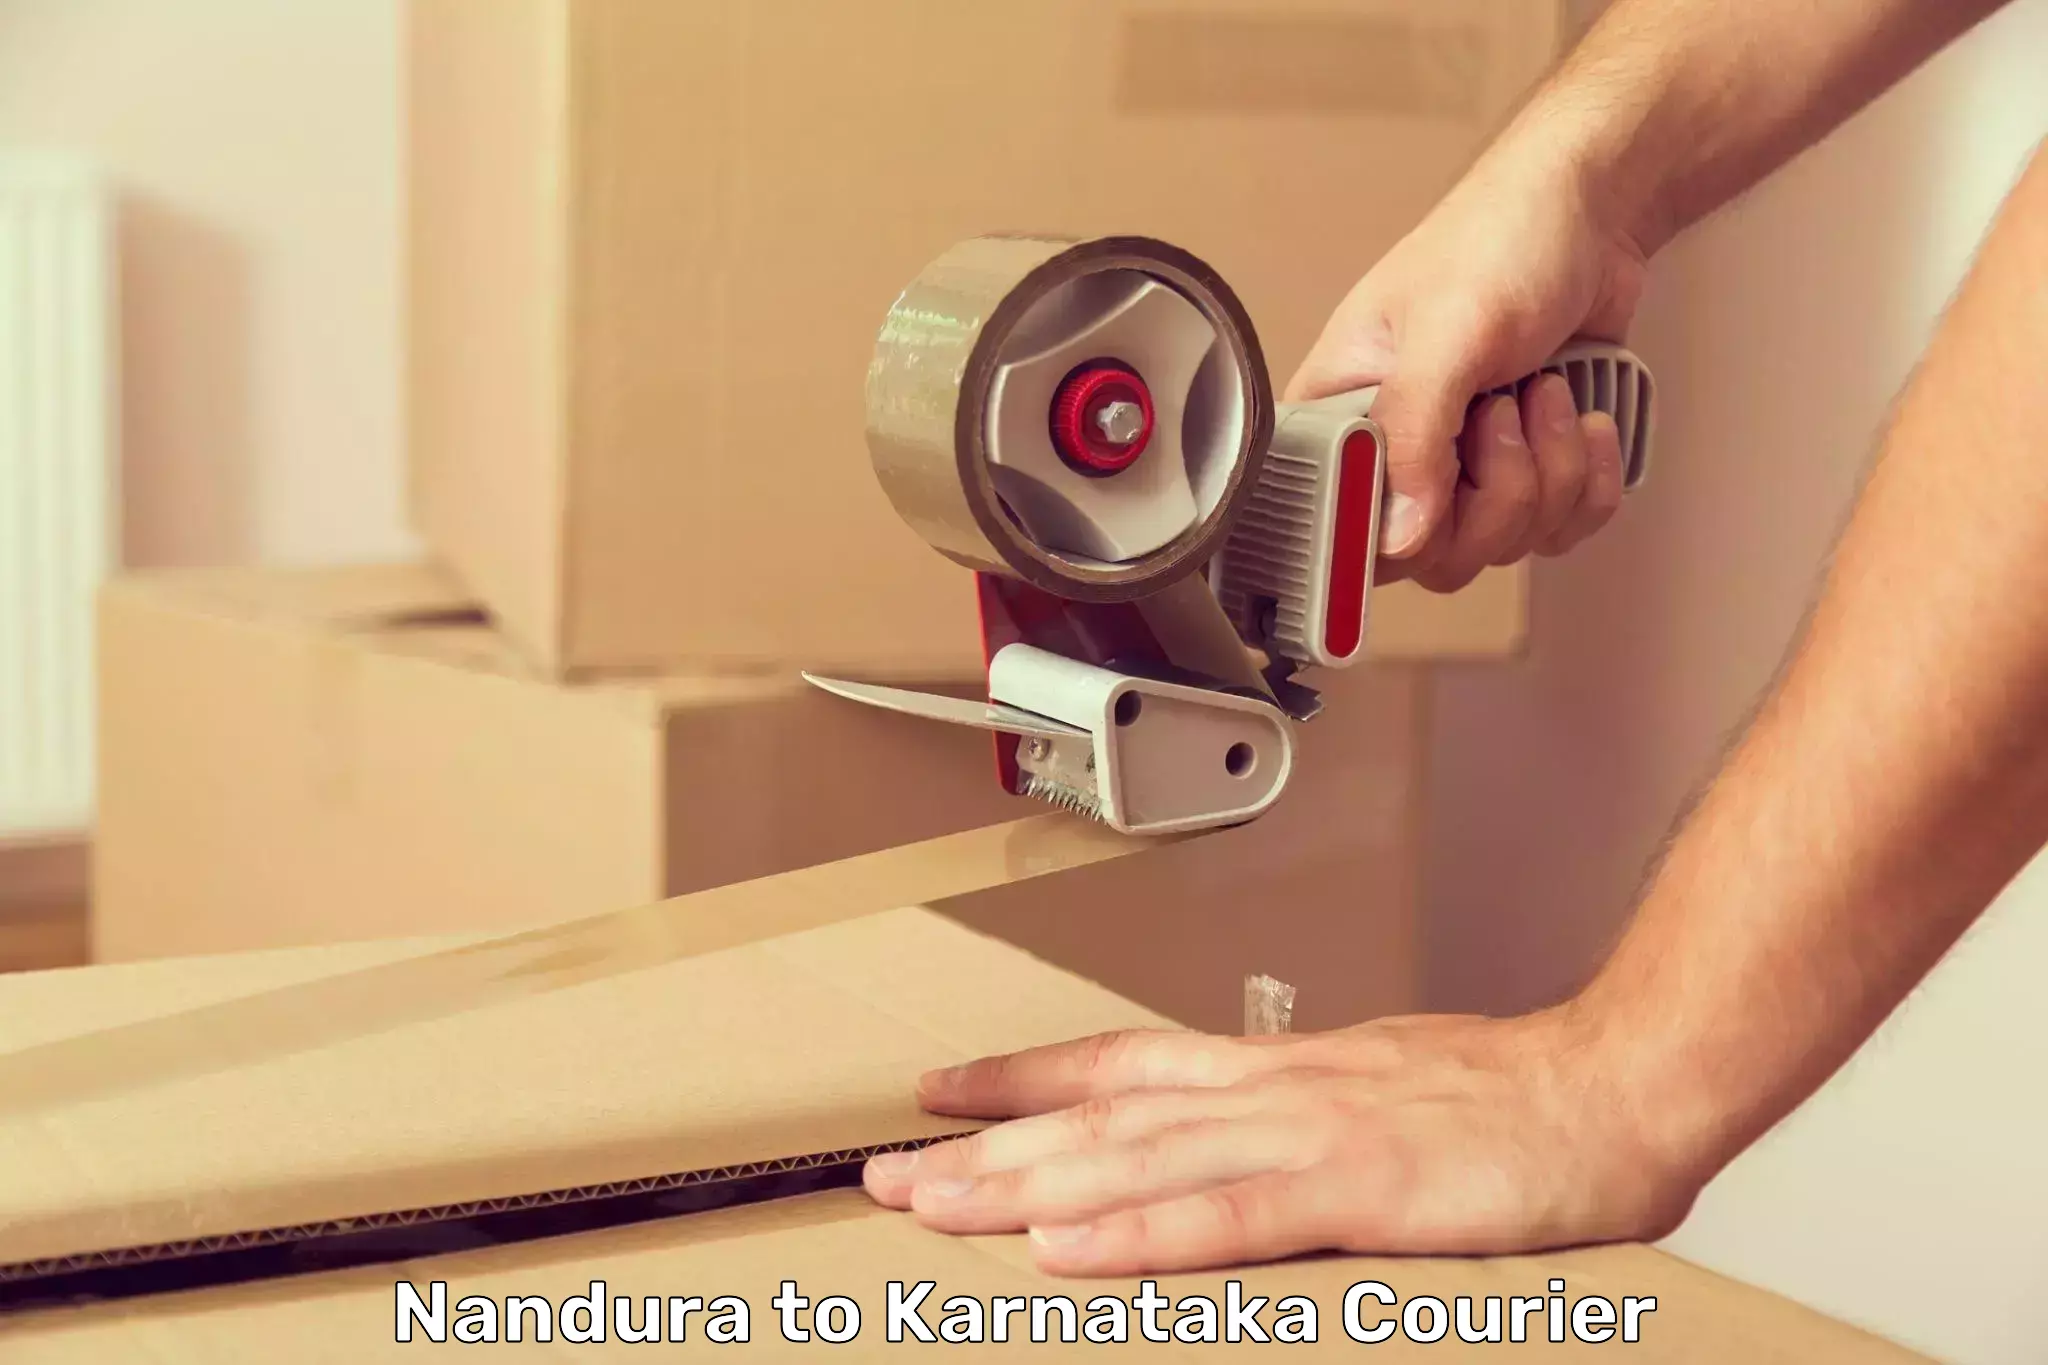 Parcel handling and care Nandura to Karnataka